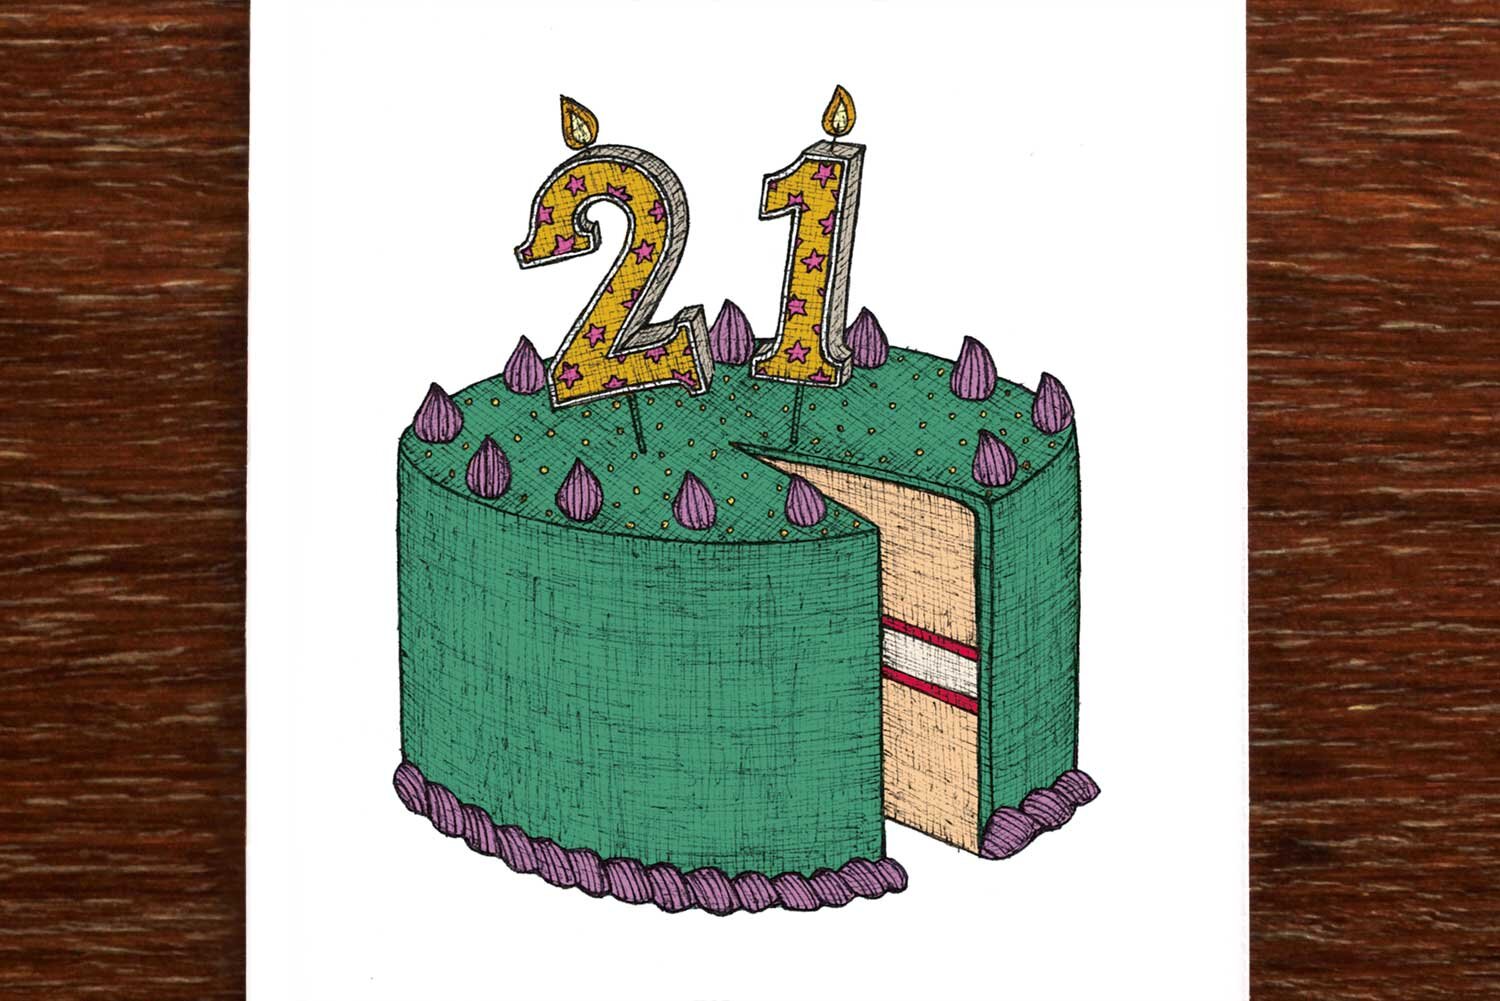 Twenty-First Birthday Cake - 21st Birthday Card